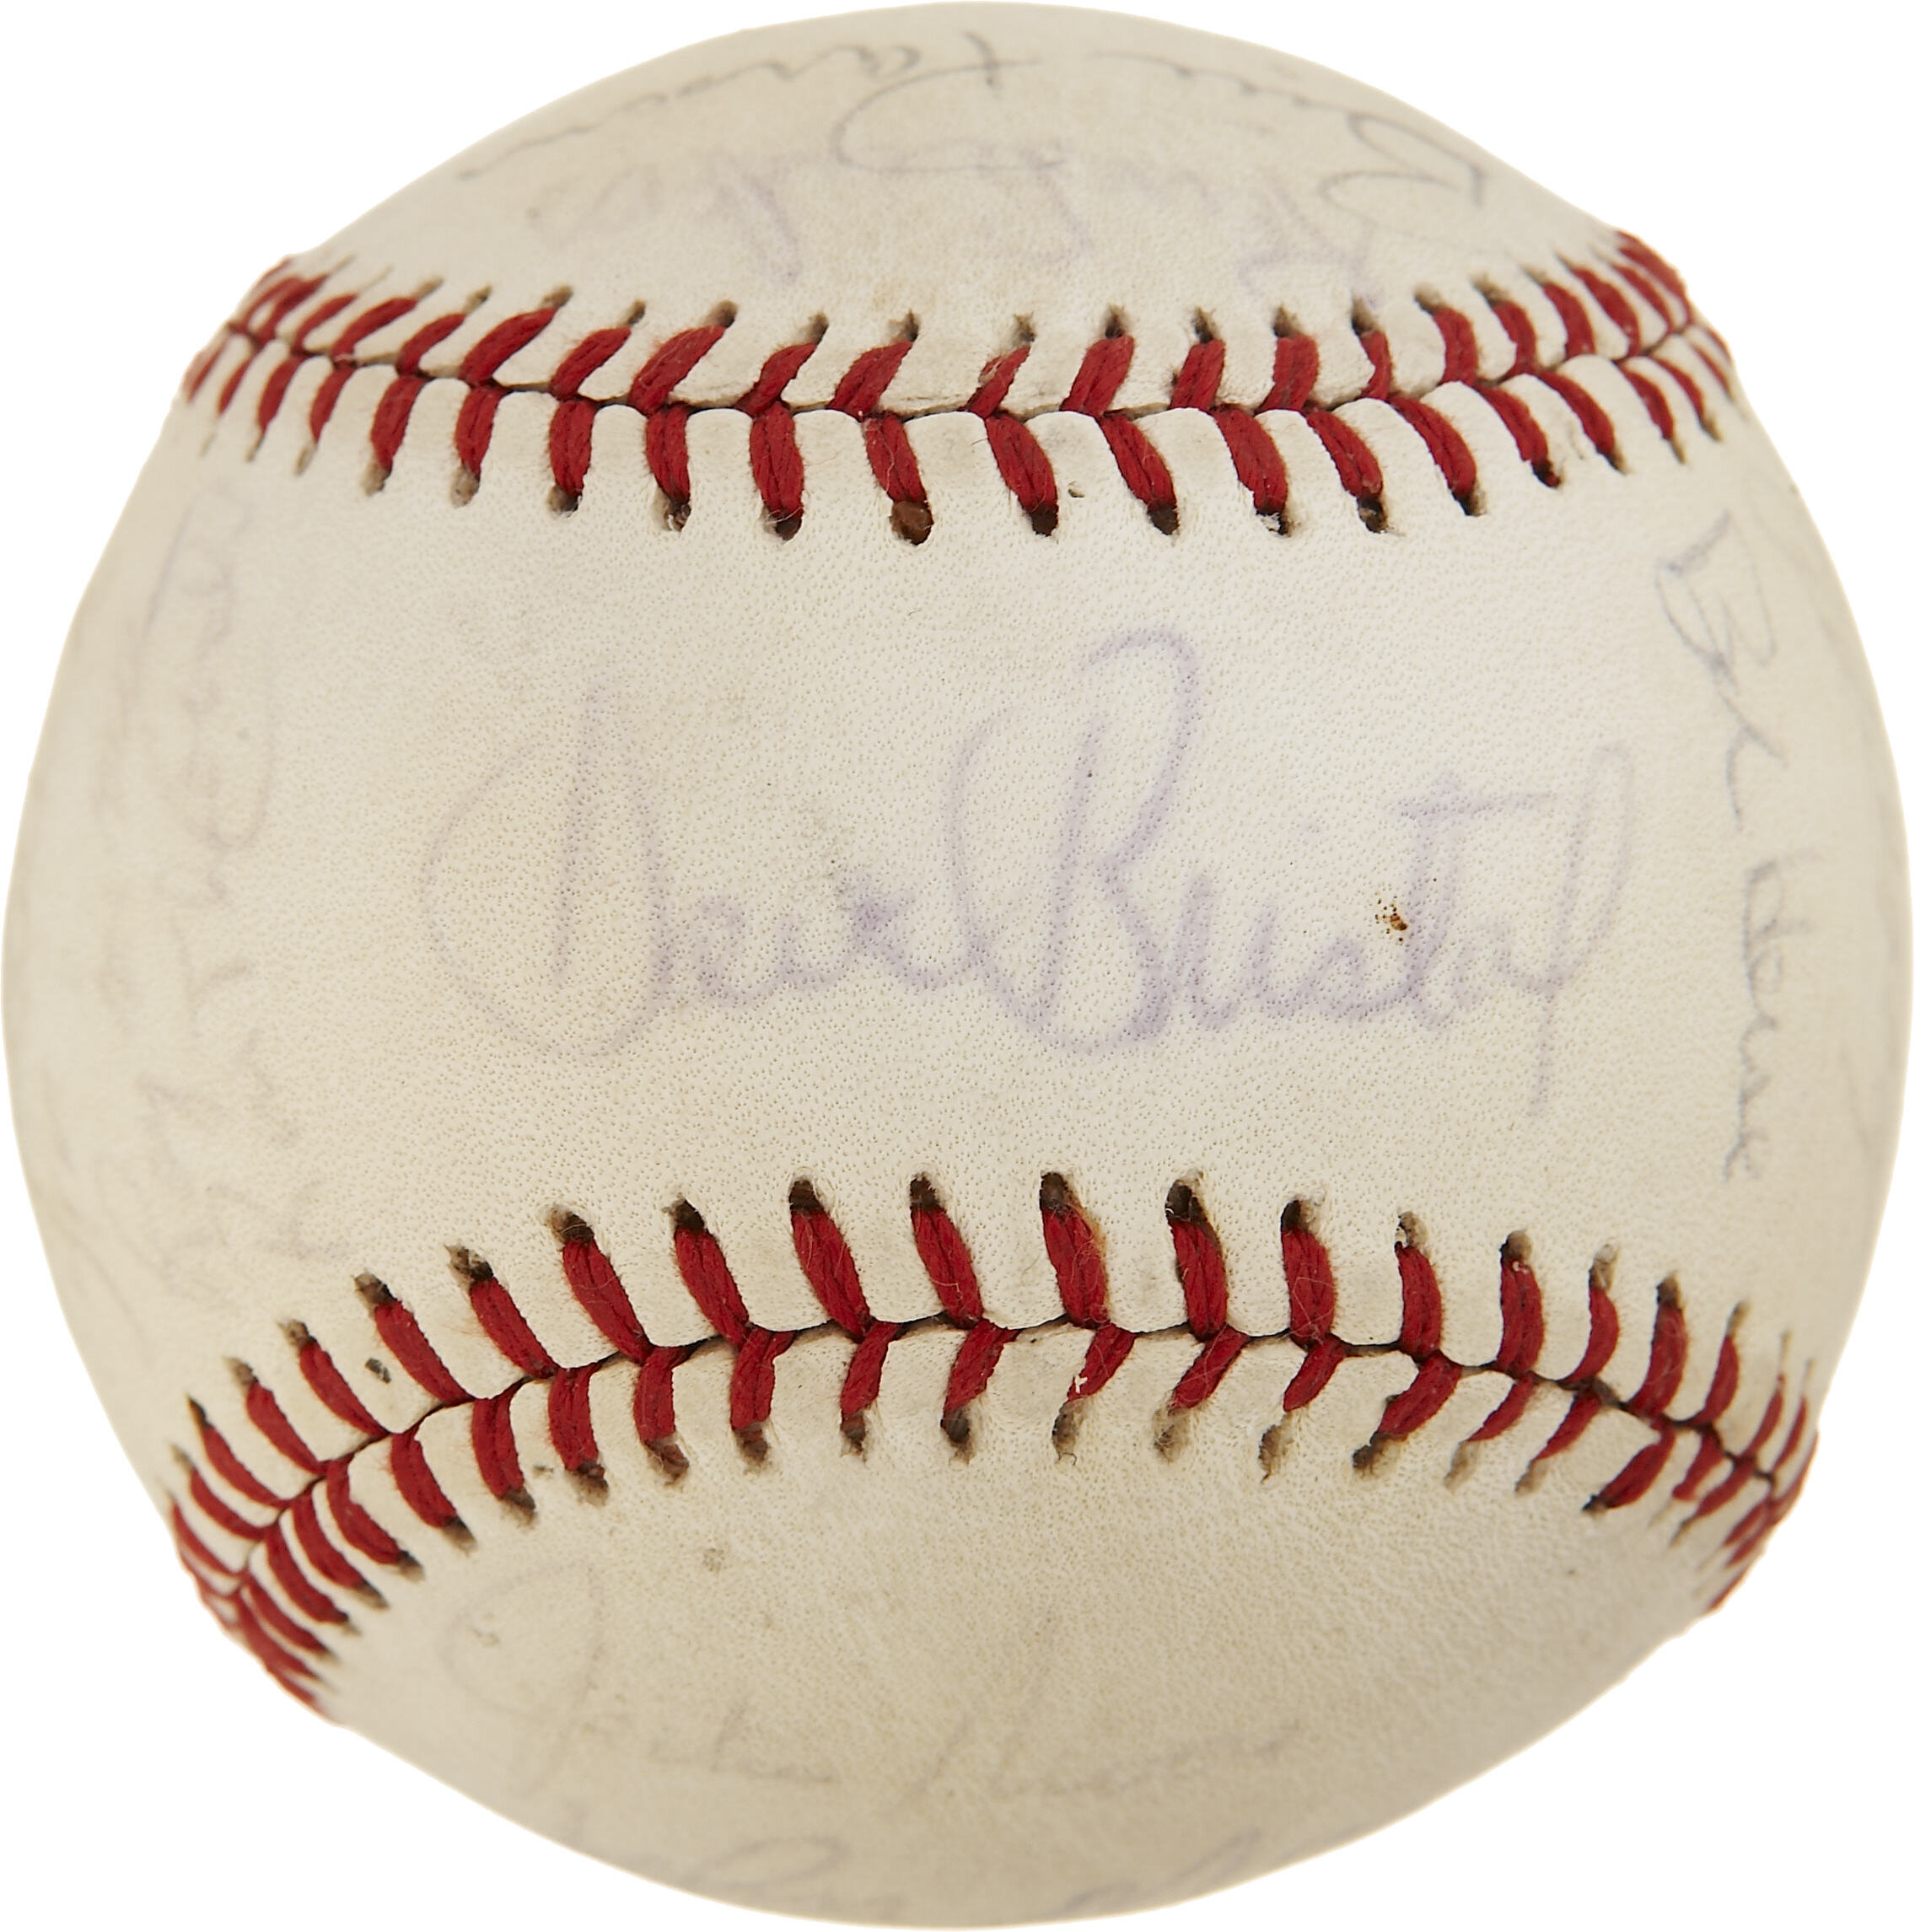 1971 Milwaukee Brewers Team Signed Baseball. Autographs